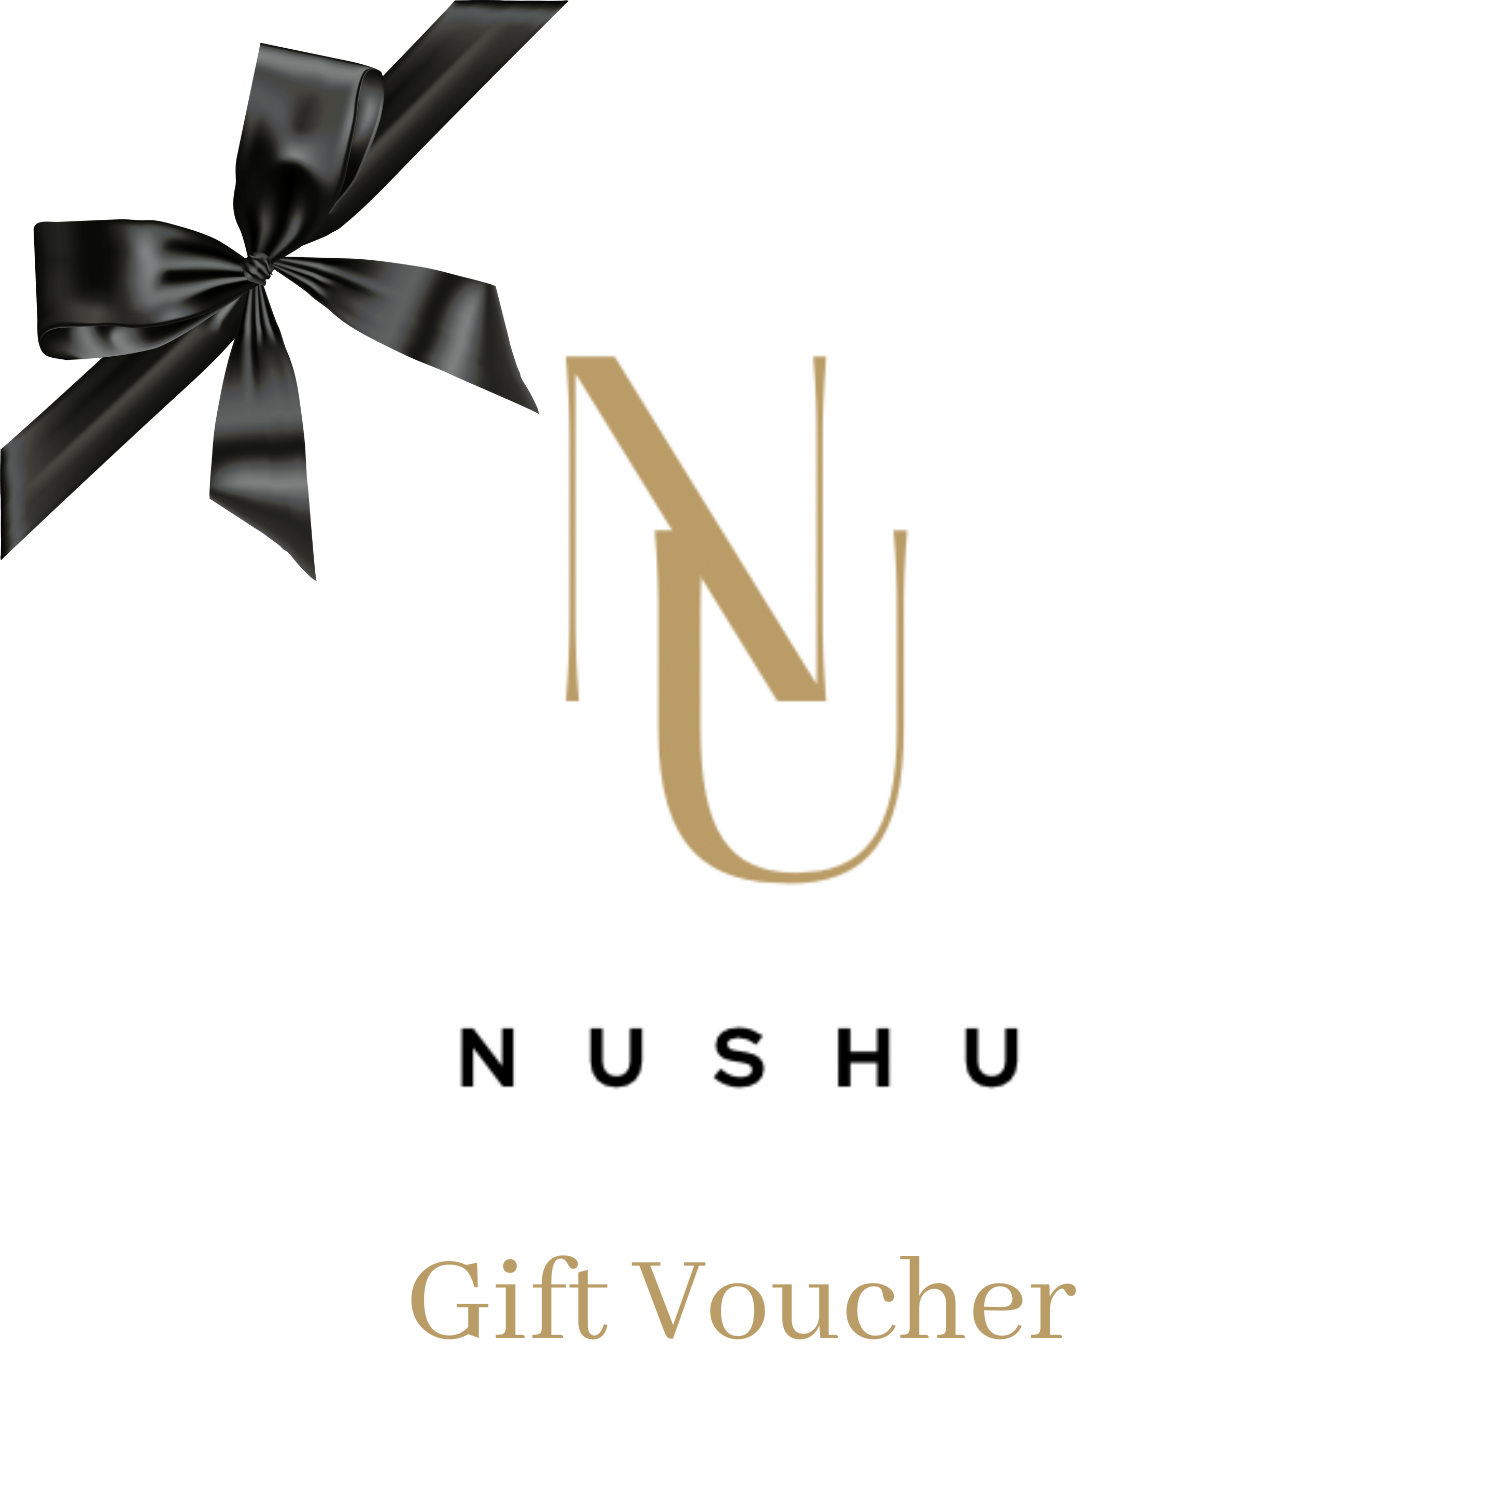 NuShu Gift Voucher